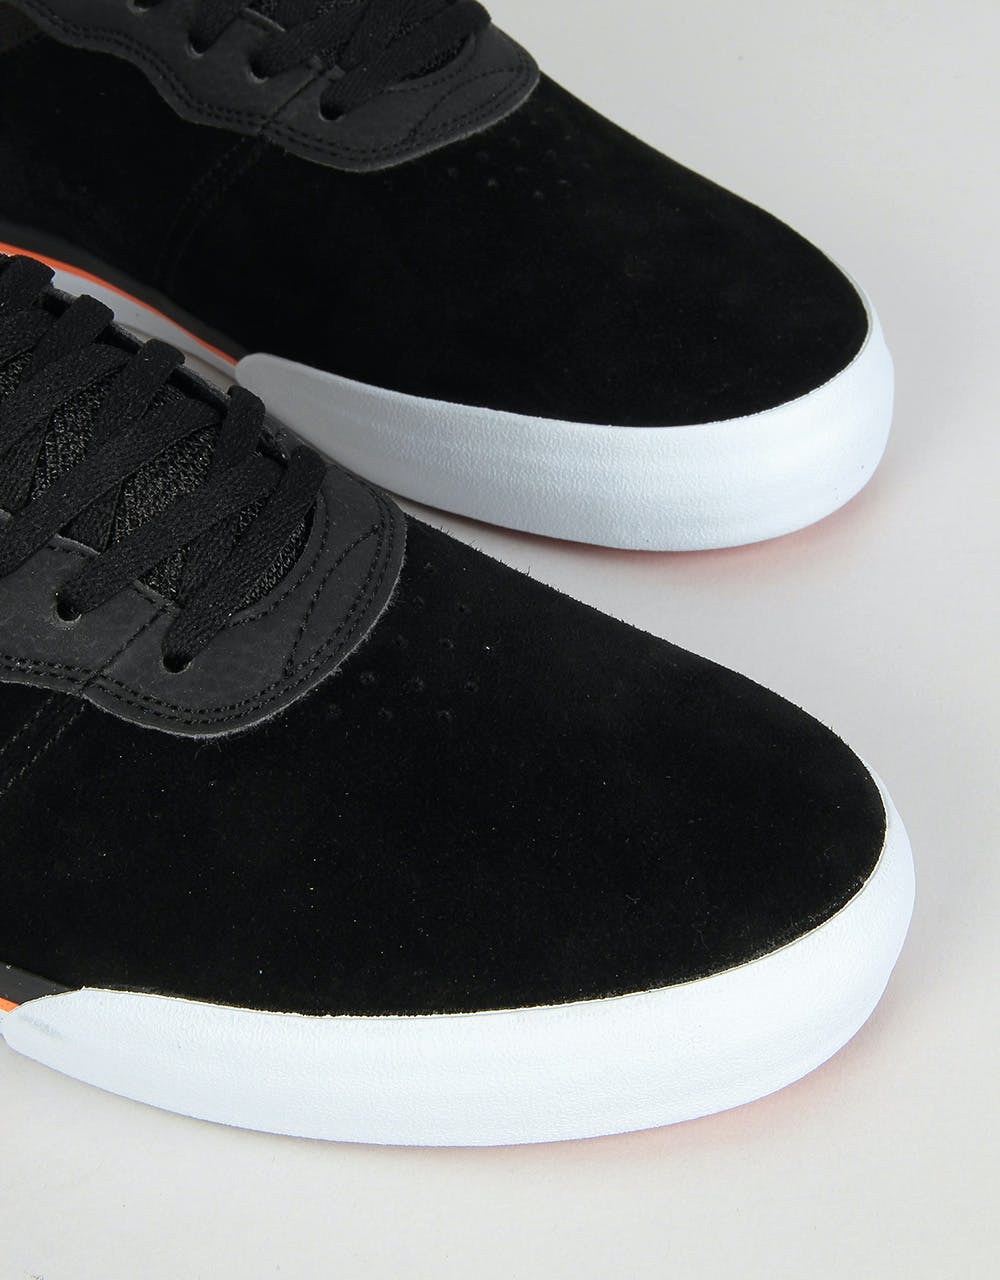 Lakai Staple Skate Shoes - Black/Orange Suede